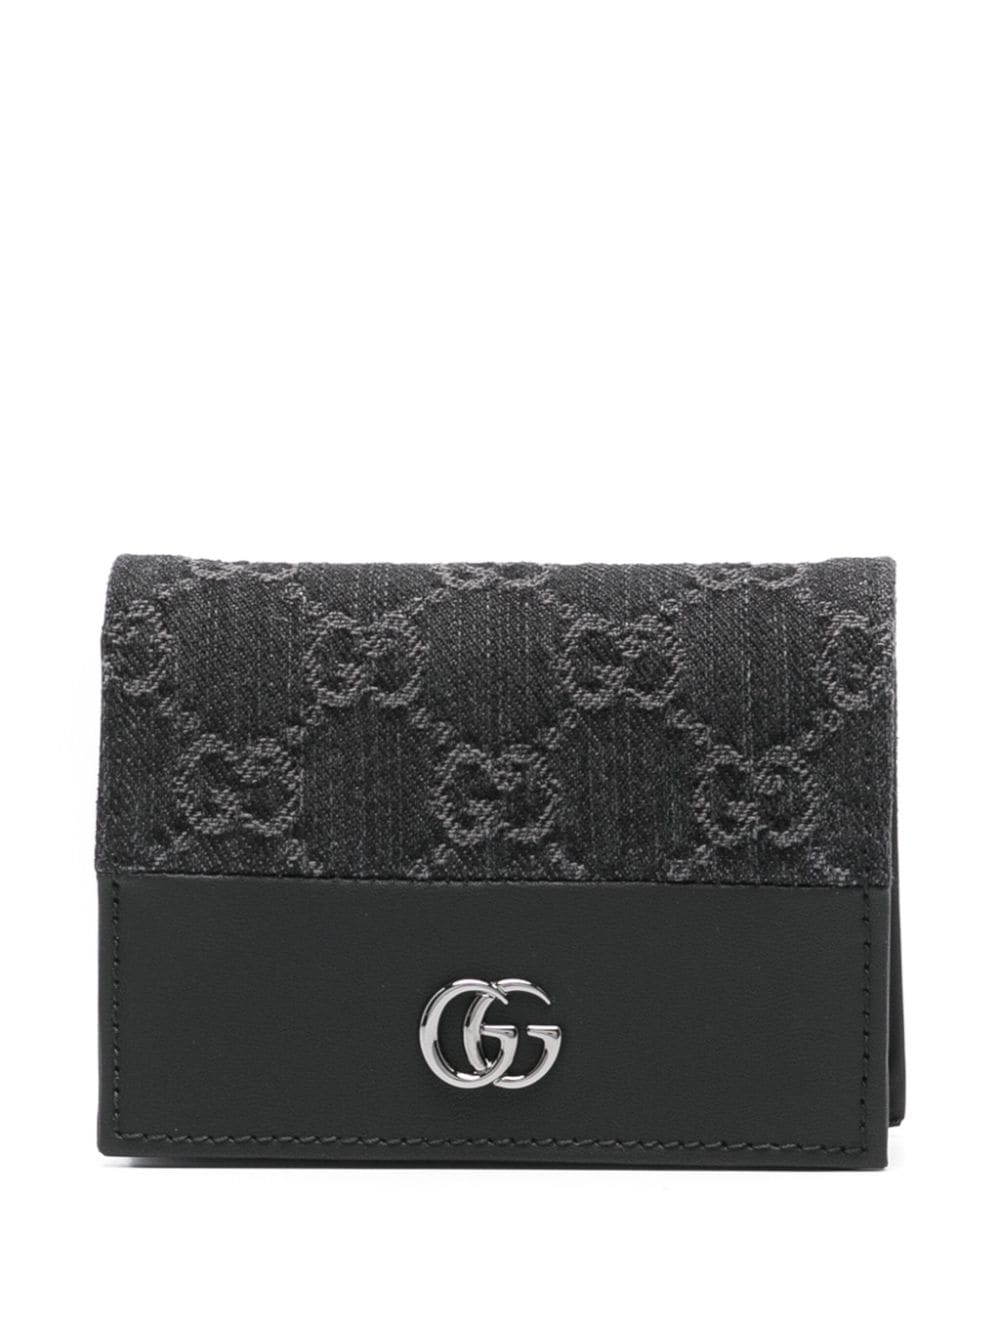 Gucci GG-supreme leather wallet - Black von Gucci